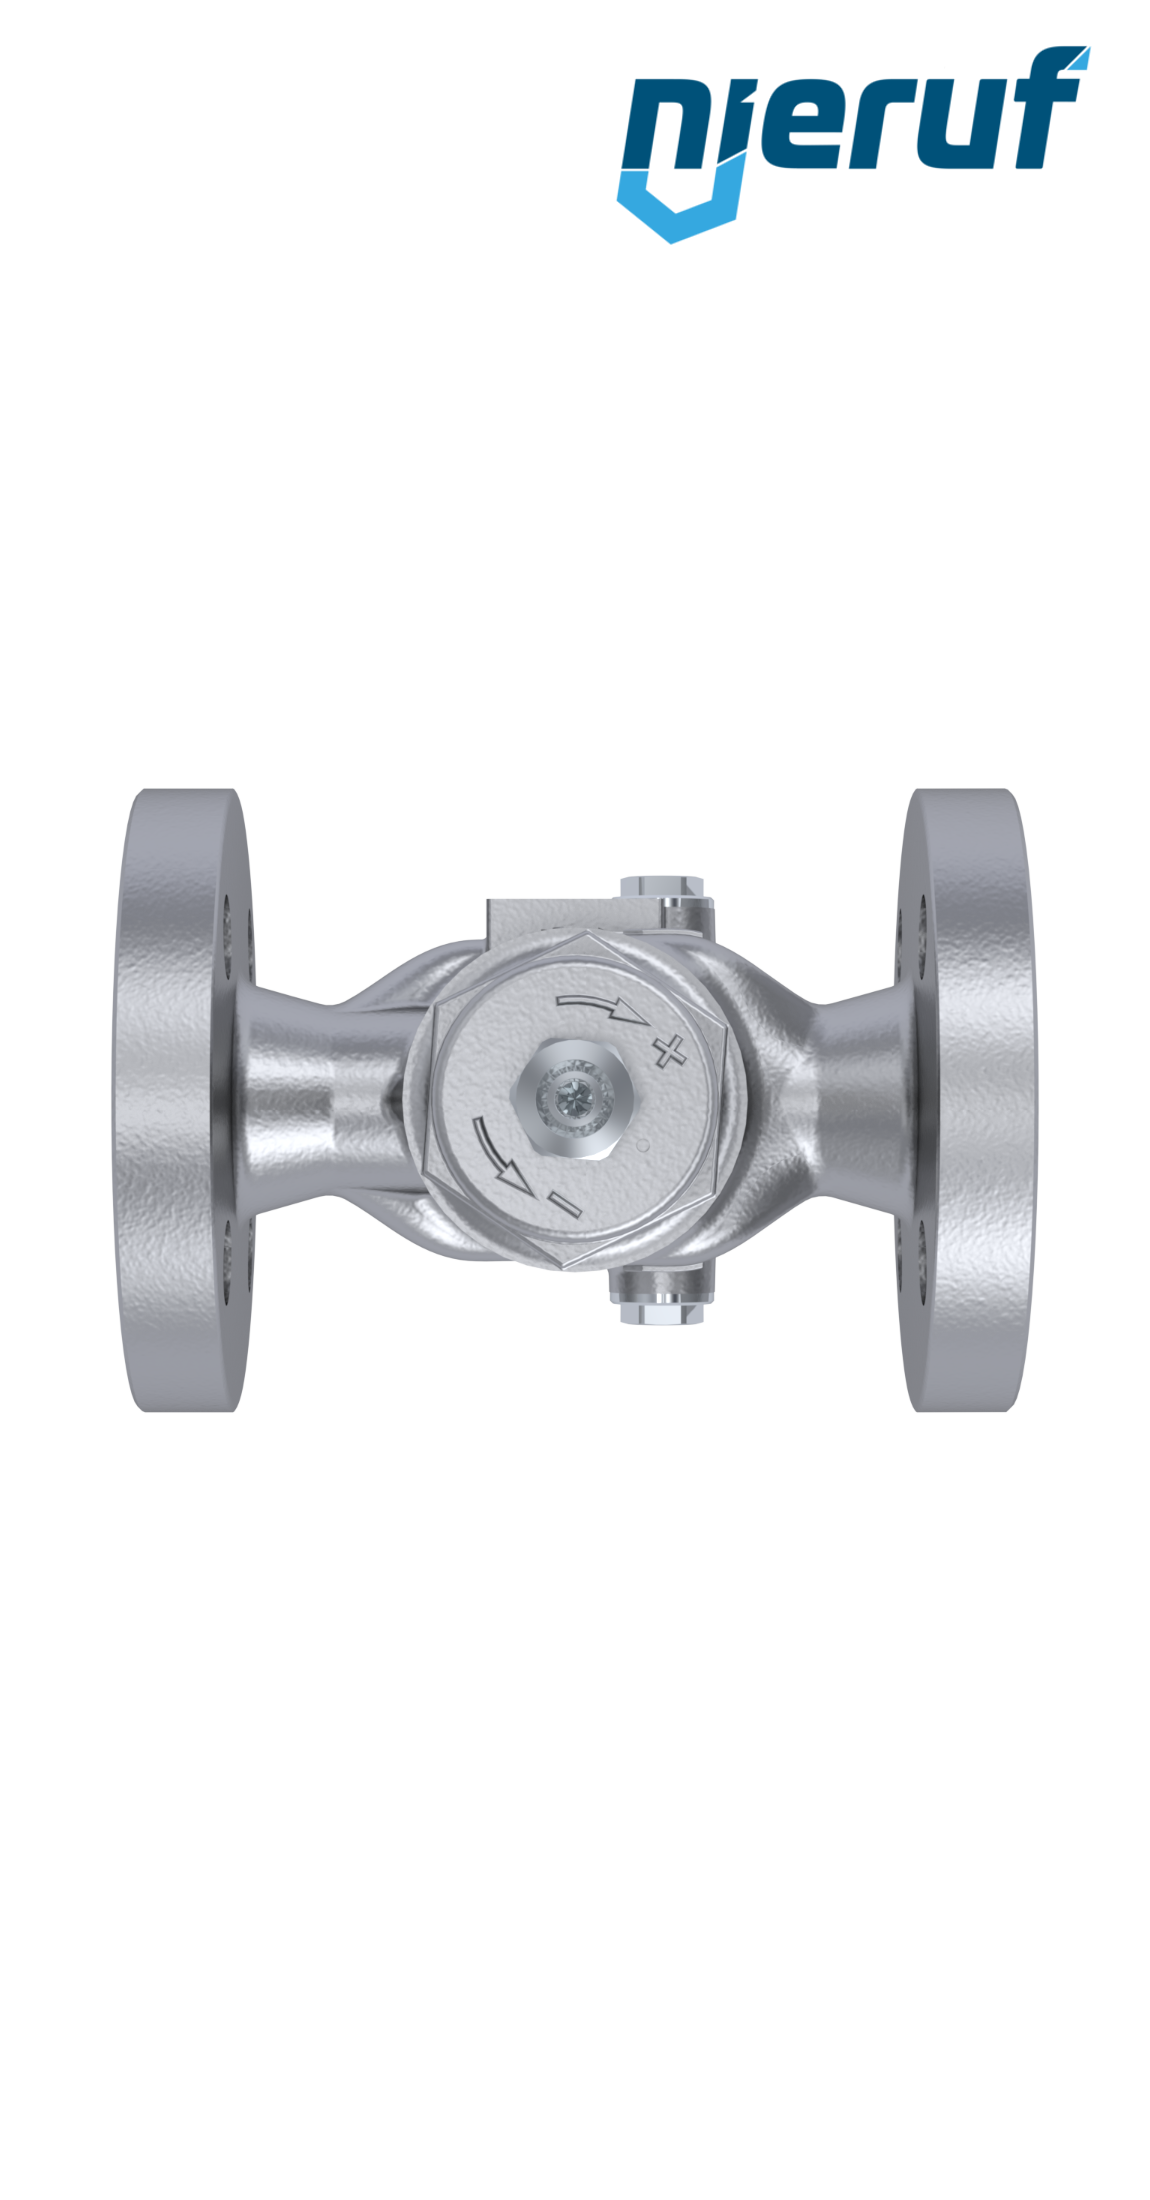 pressure reducing valve DN 20 DM20 stainless steel EPDM 0.5 - 9.0 bar